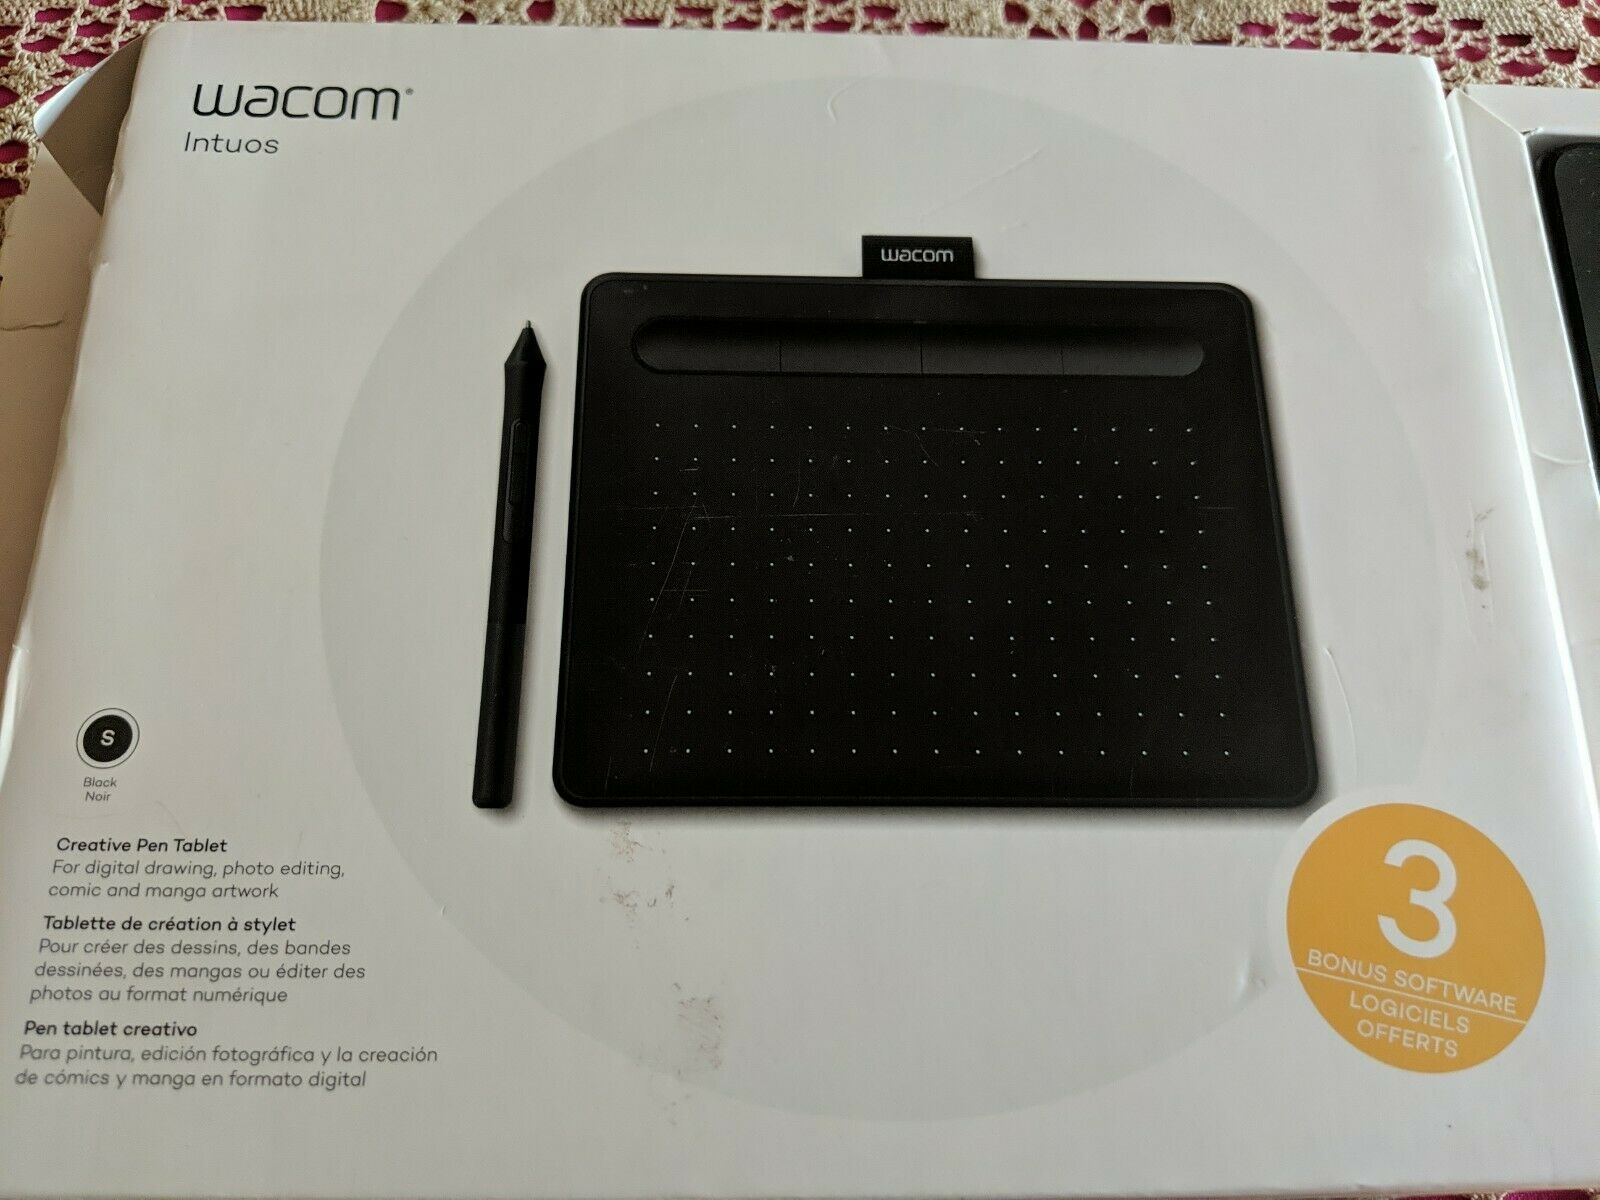 New Wacom Intuos Graphics Drawing Tablet, Small 7.9"x 6.3", Black, CTL4100